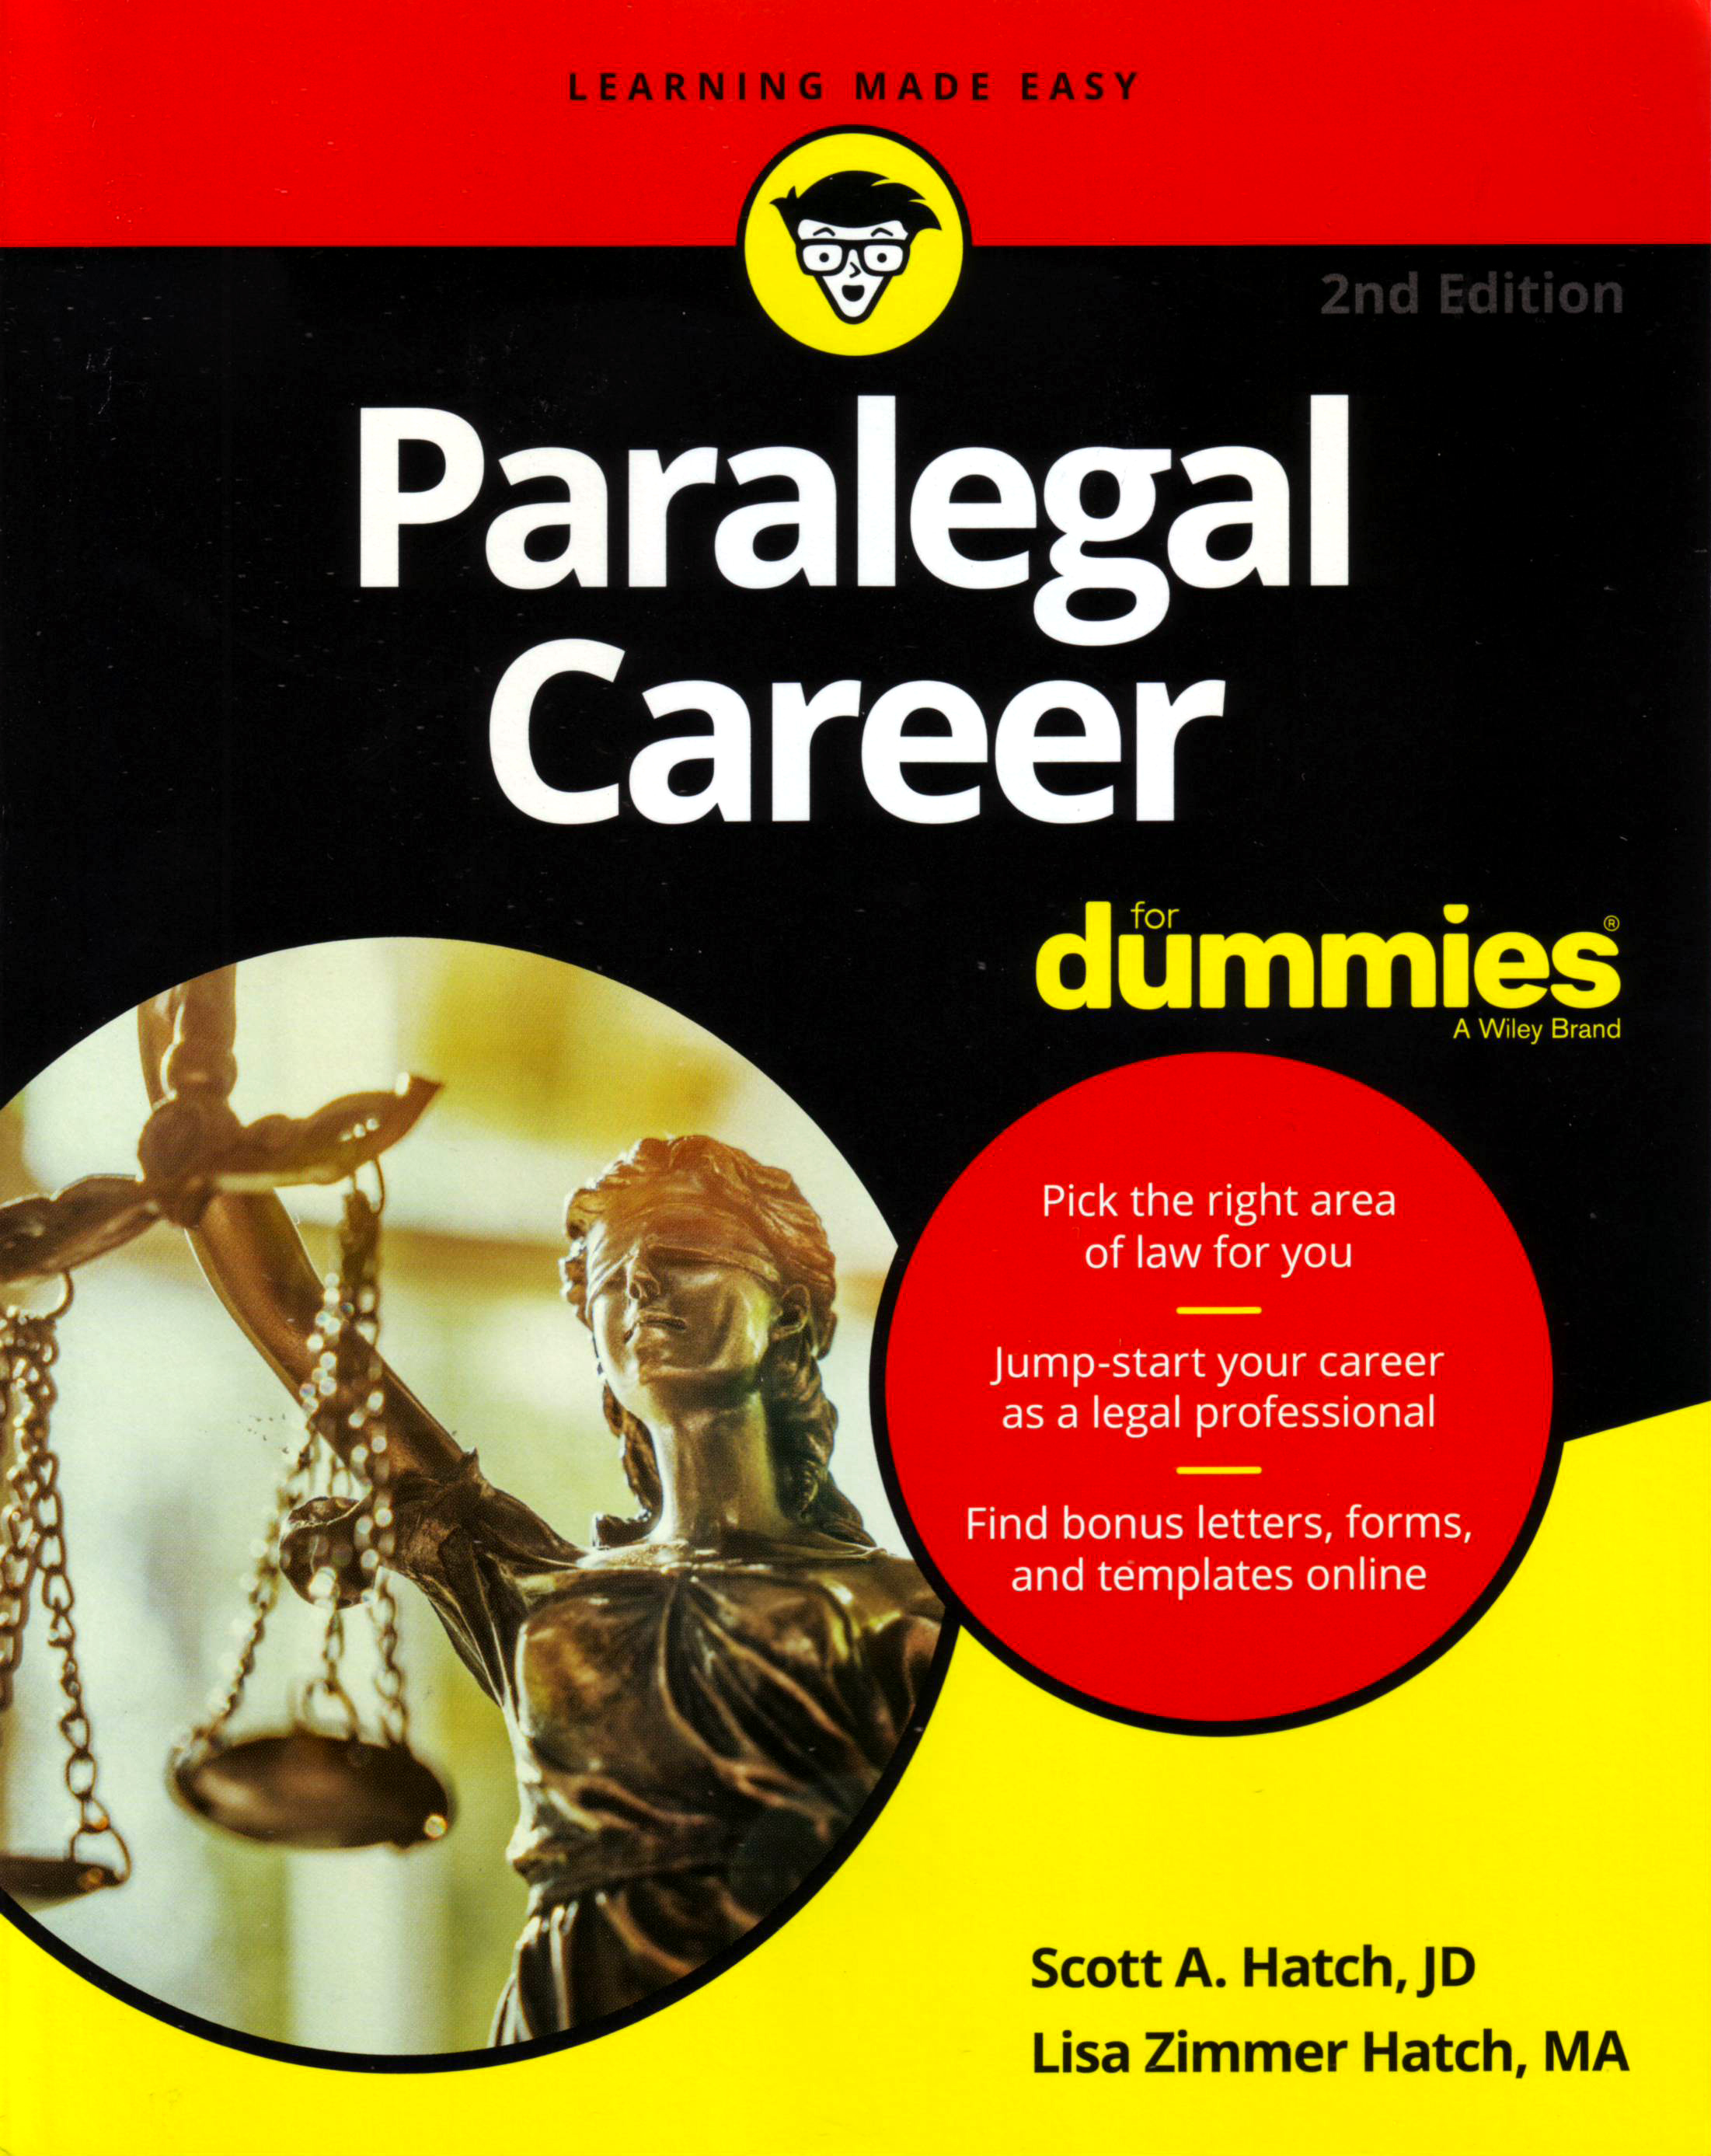 Paralegal Career For Dummies e2